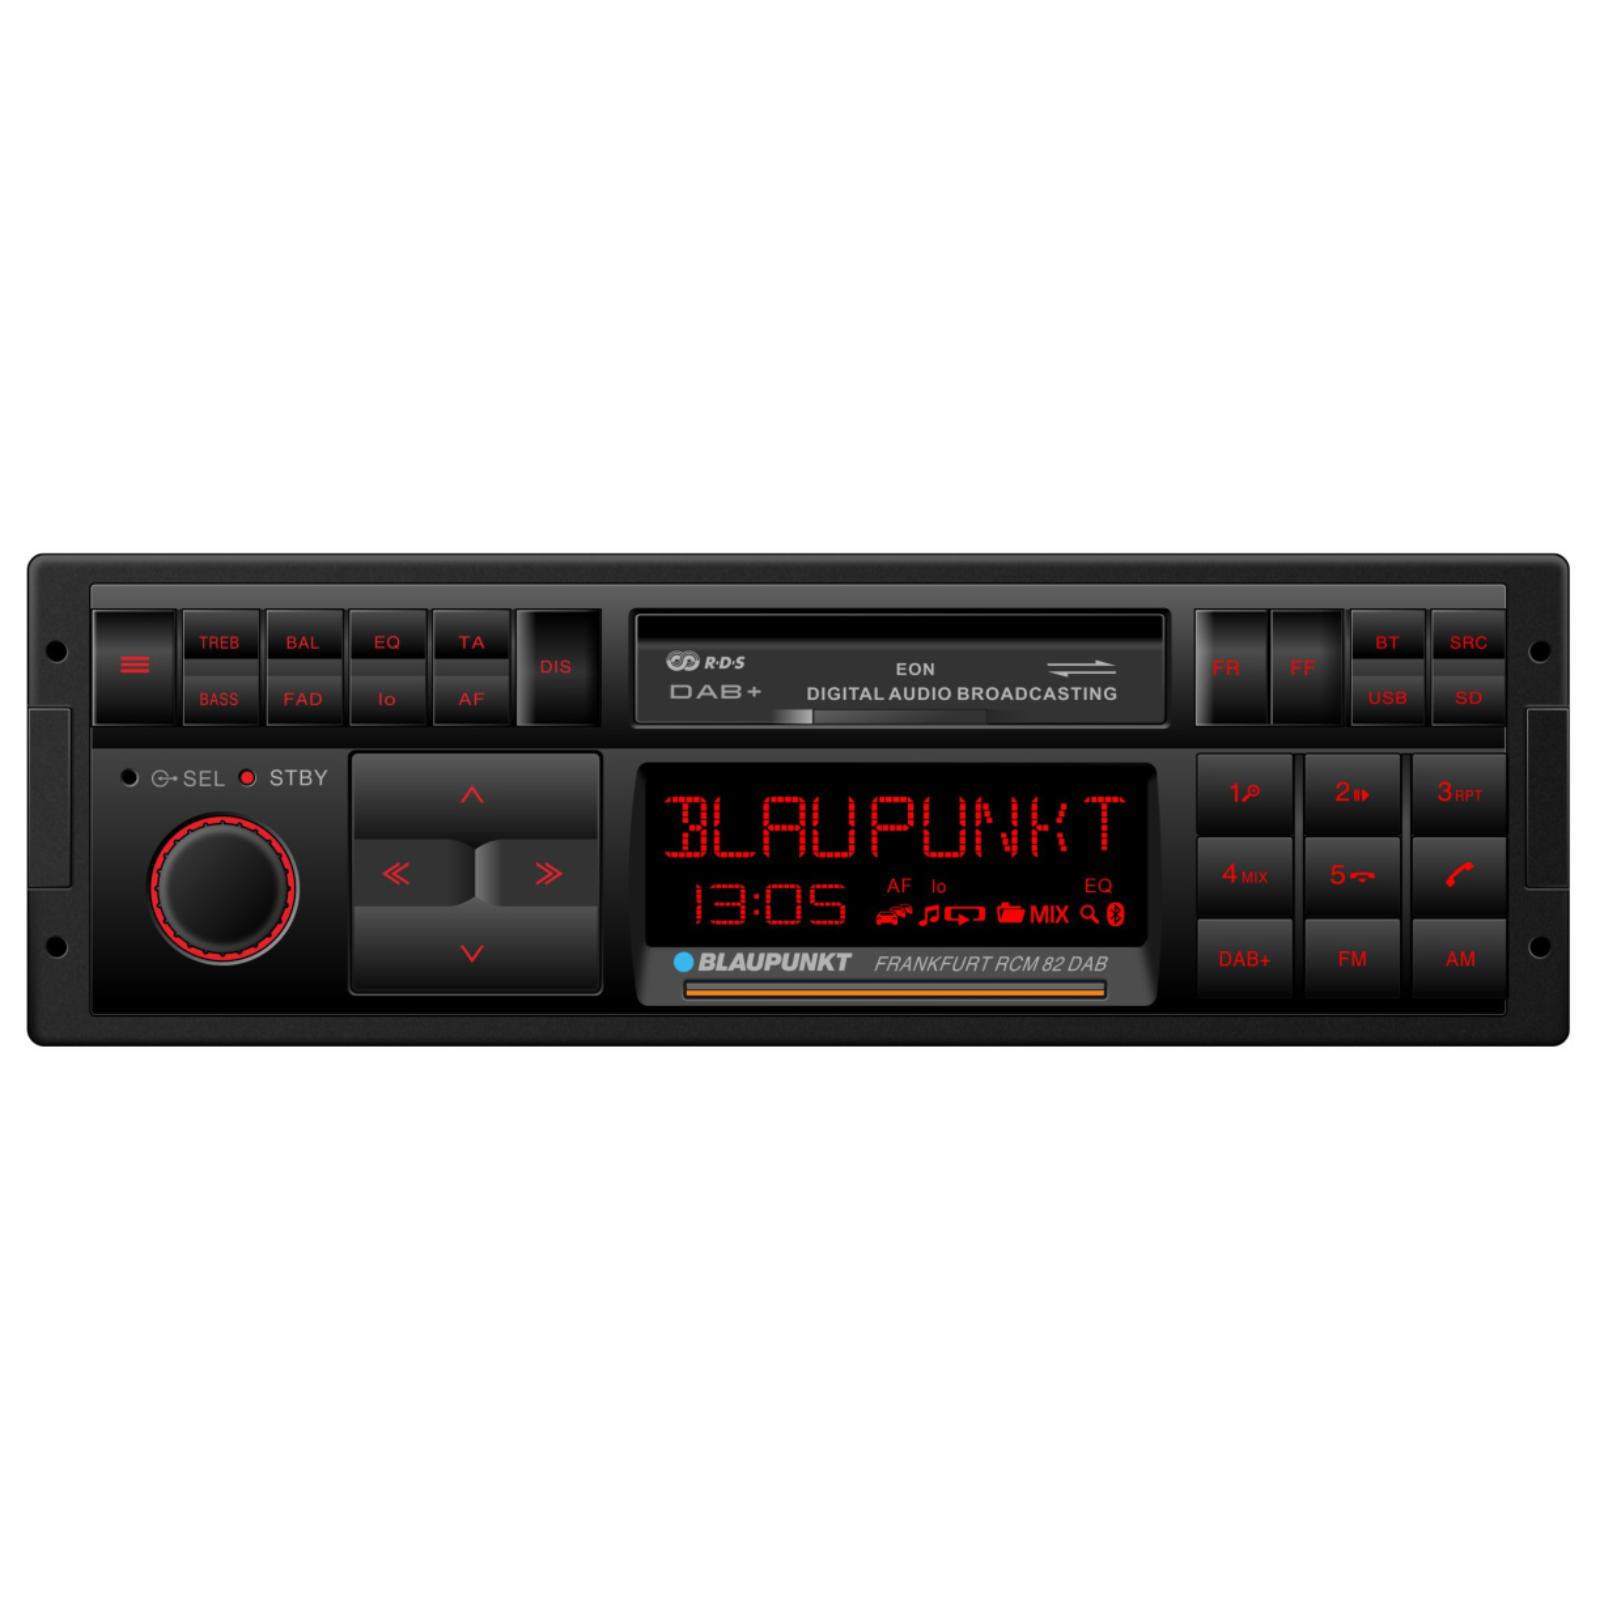 Blaupunkt Frankfurt RCM 82 DAB Retro Classic Car Stereo Bluetooth USB SD AUX